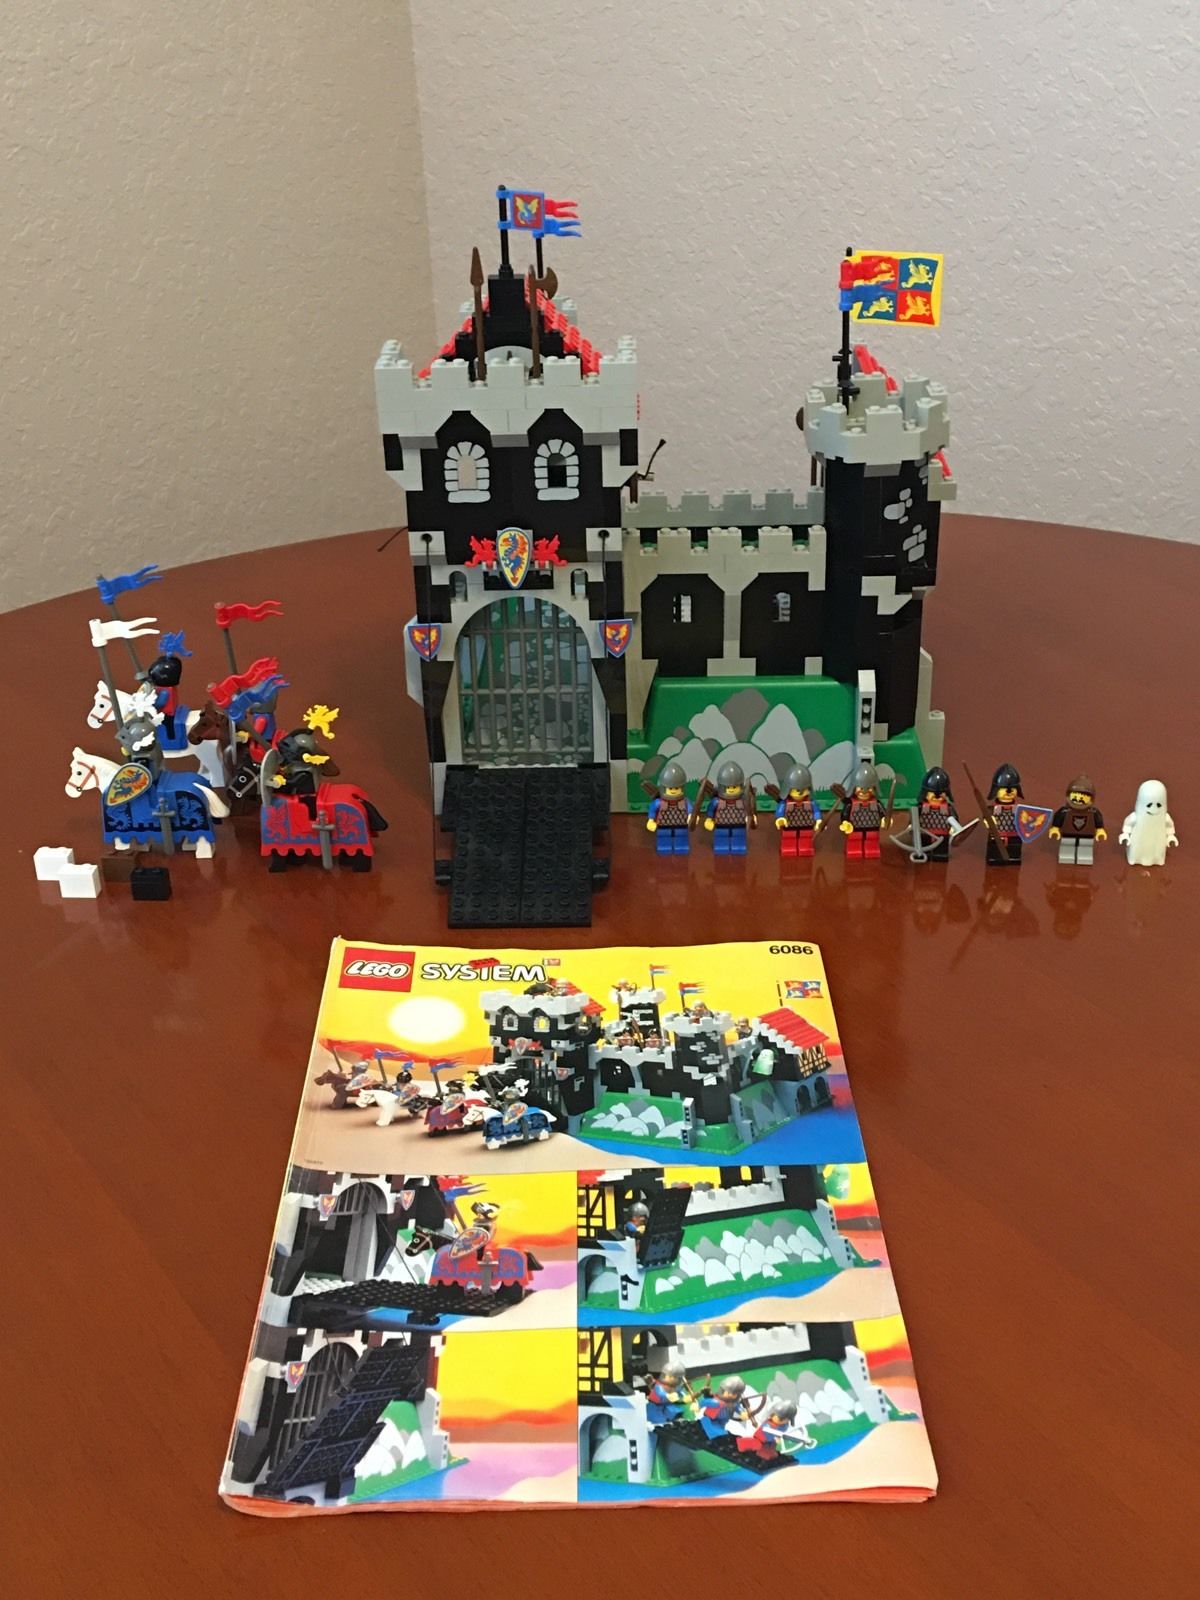 silke sælge læsning Ryan Walls on Twitter: "FOR SALE VINTAGE LEGO 6086 BLACK KNIGHT'S CASTLE # Lego #Knights #GameOfThrones #Minifigure https://t.co/Utt5D1YRFF  https://t.co/X2gQ9SE161" / Twitter